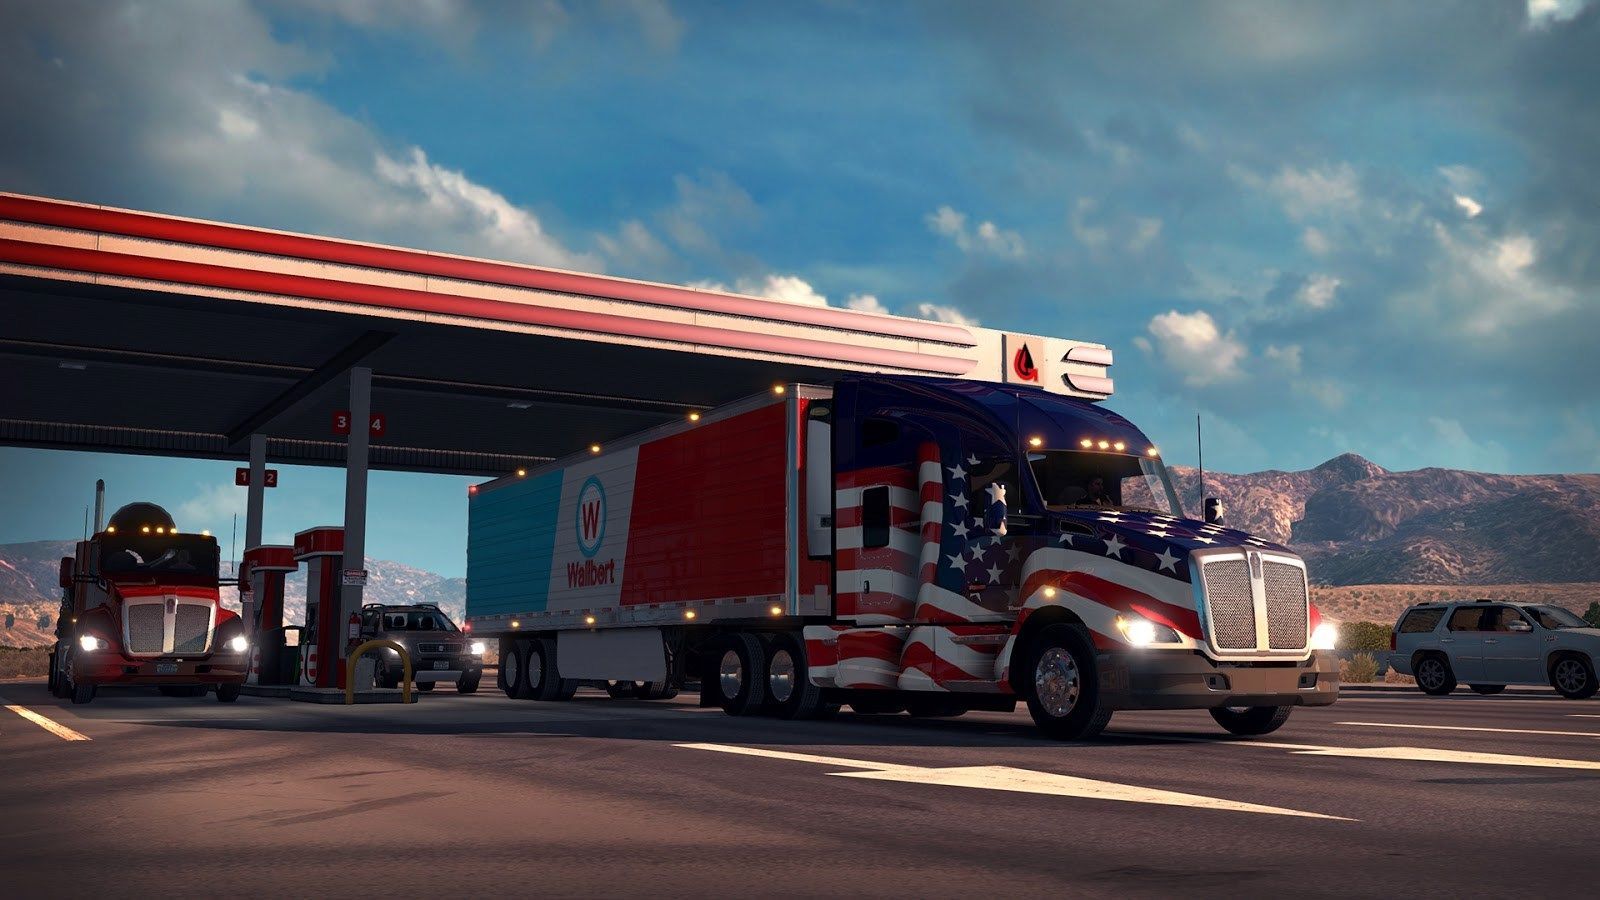 most beautiful american truck simulator wallpaper. American truck